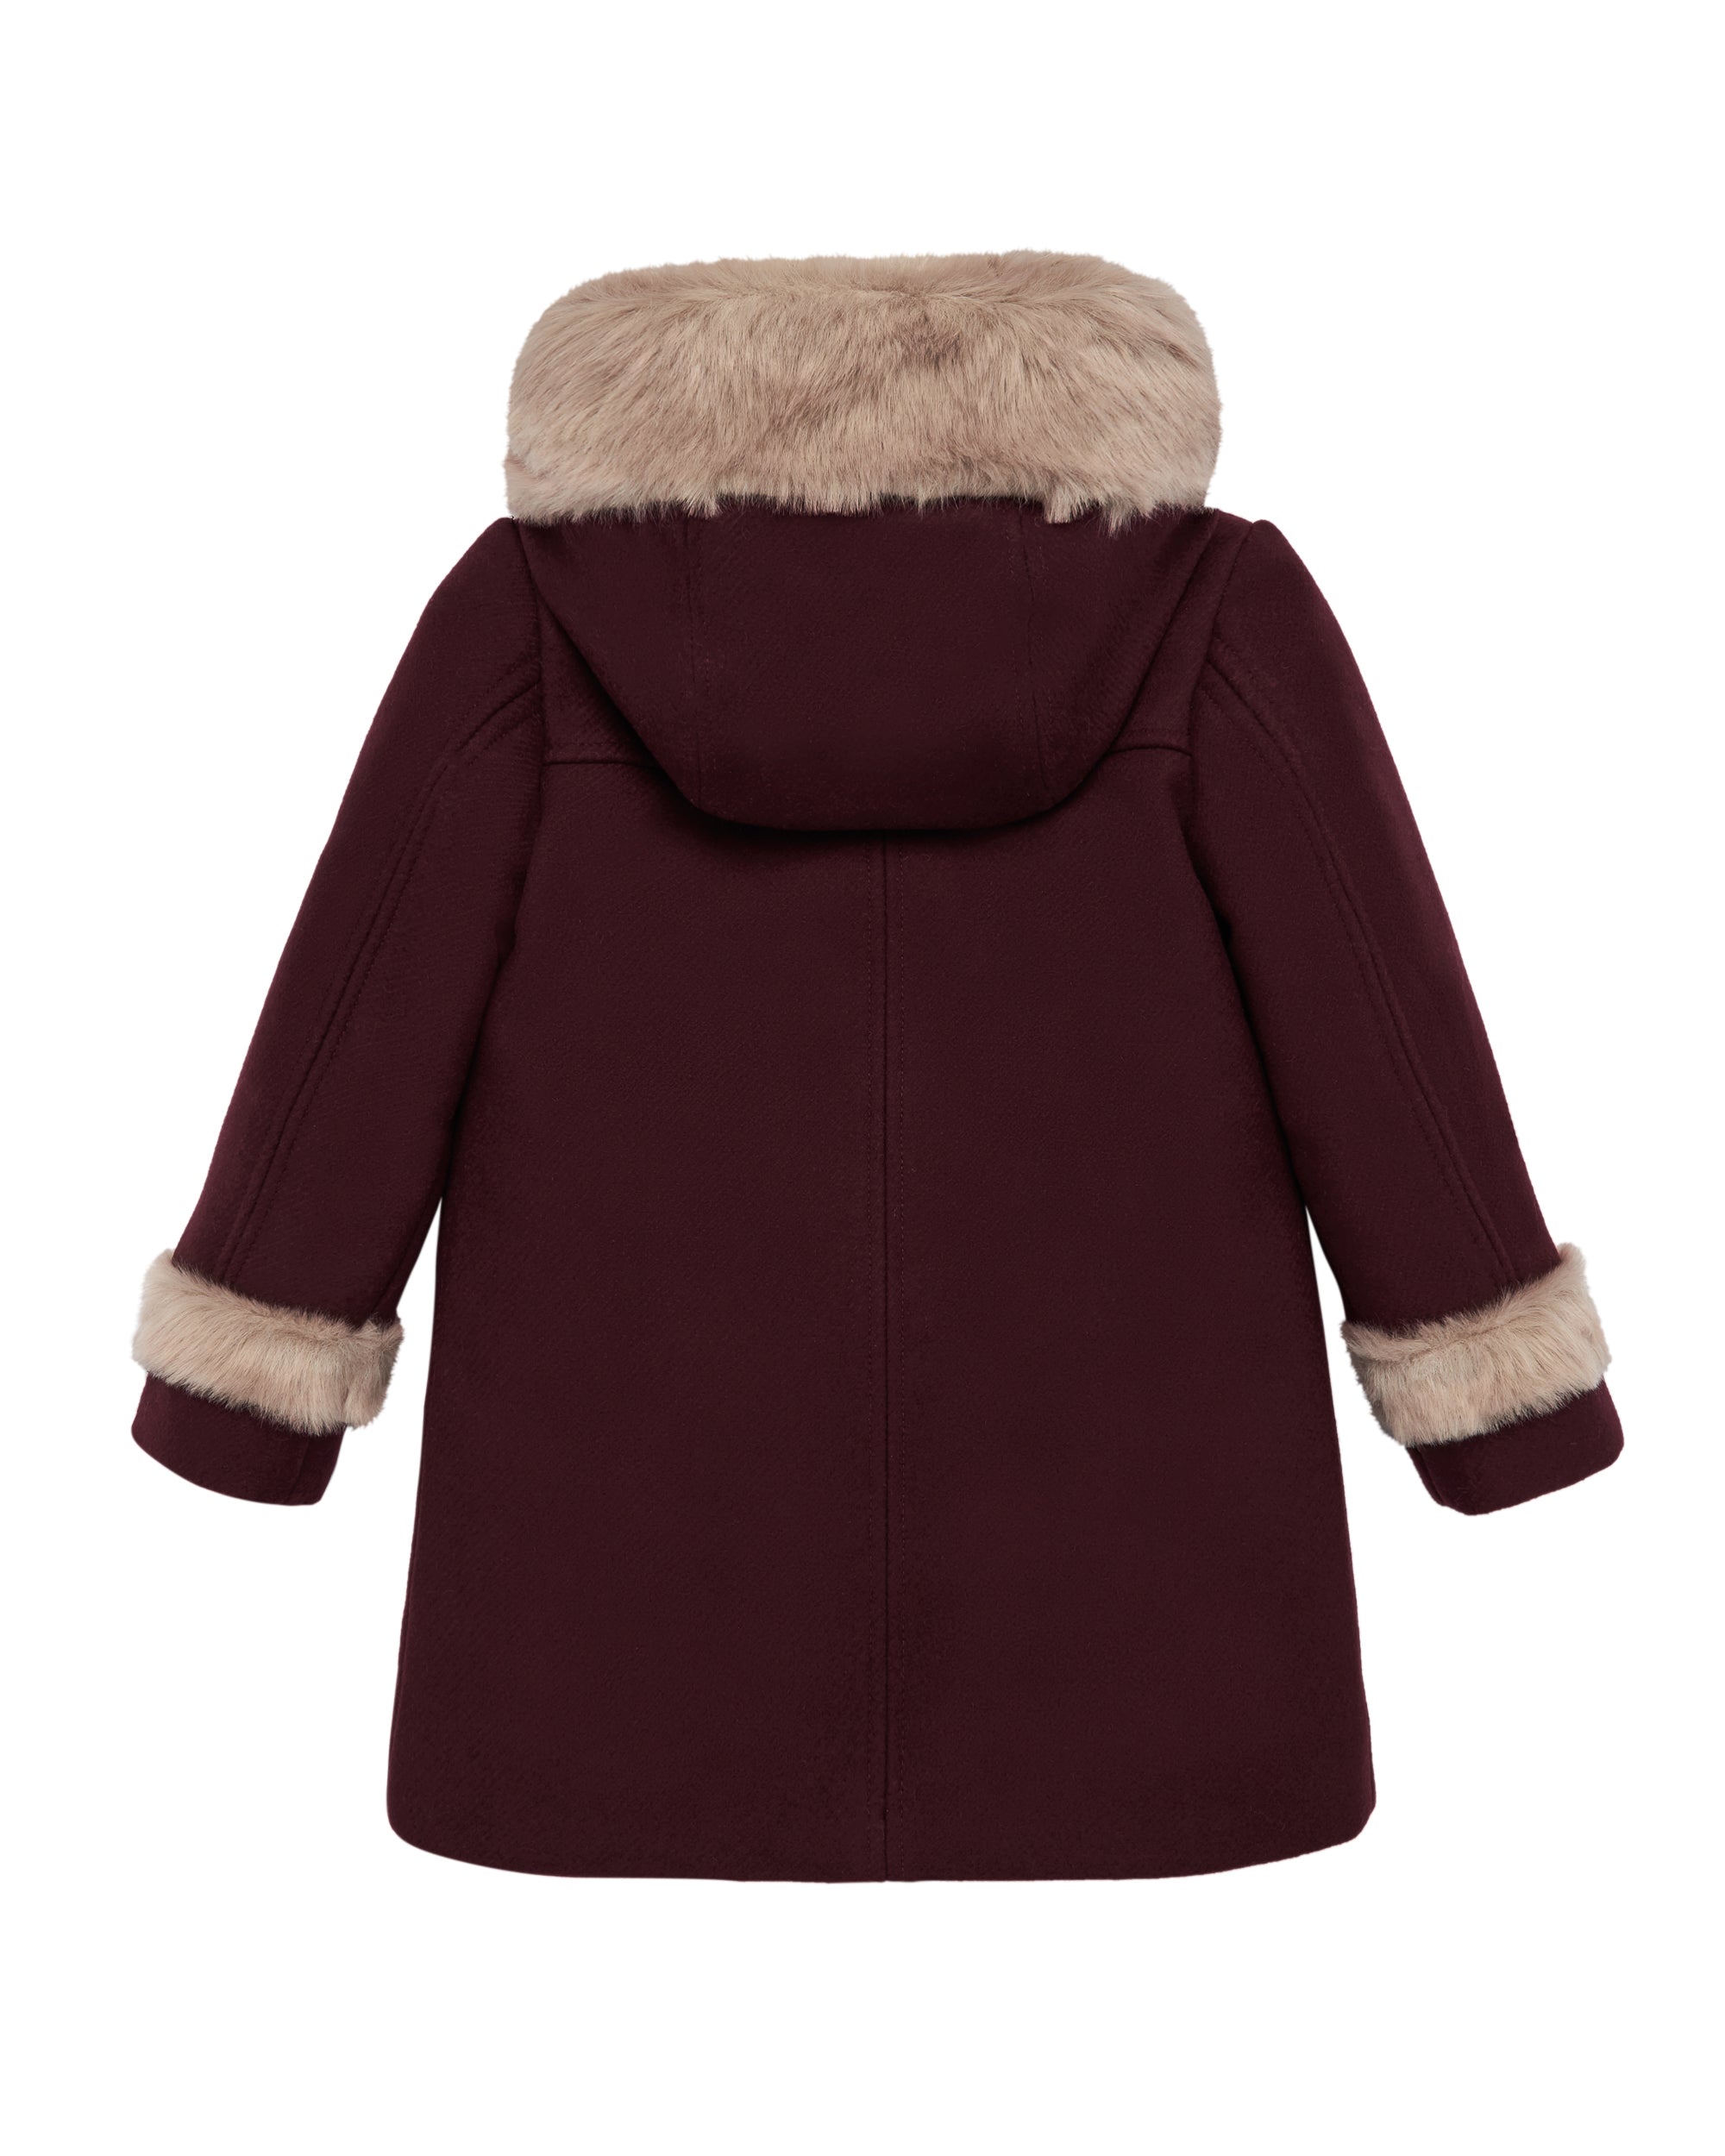 burgundy winter coat with fur hood